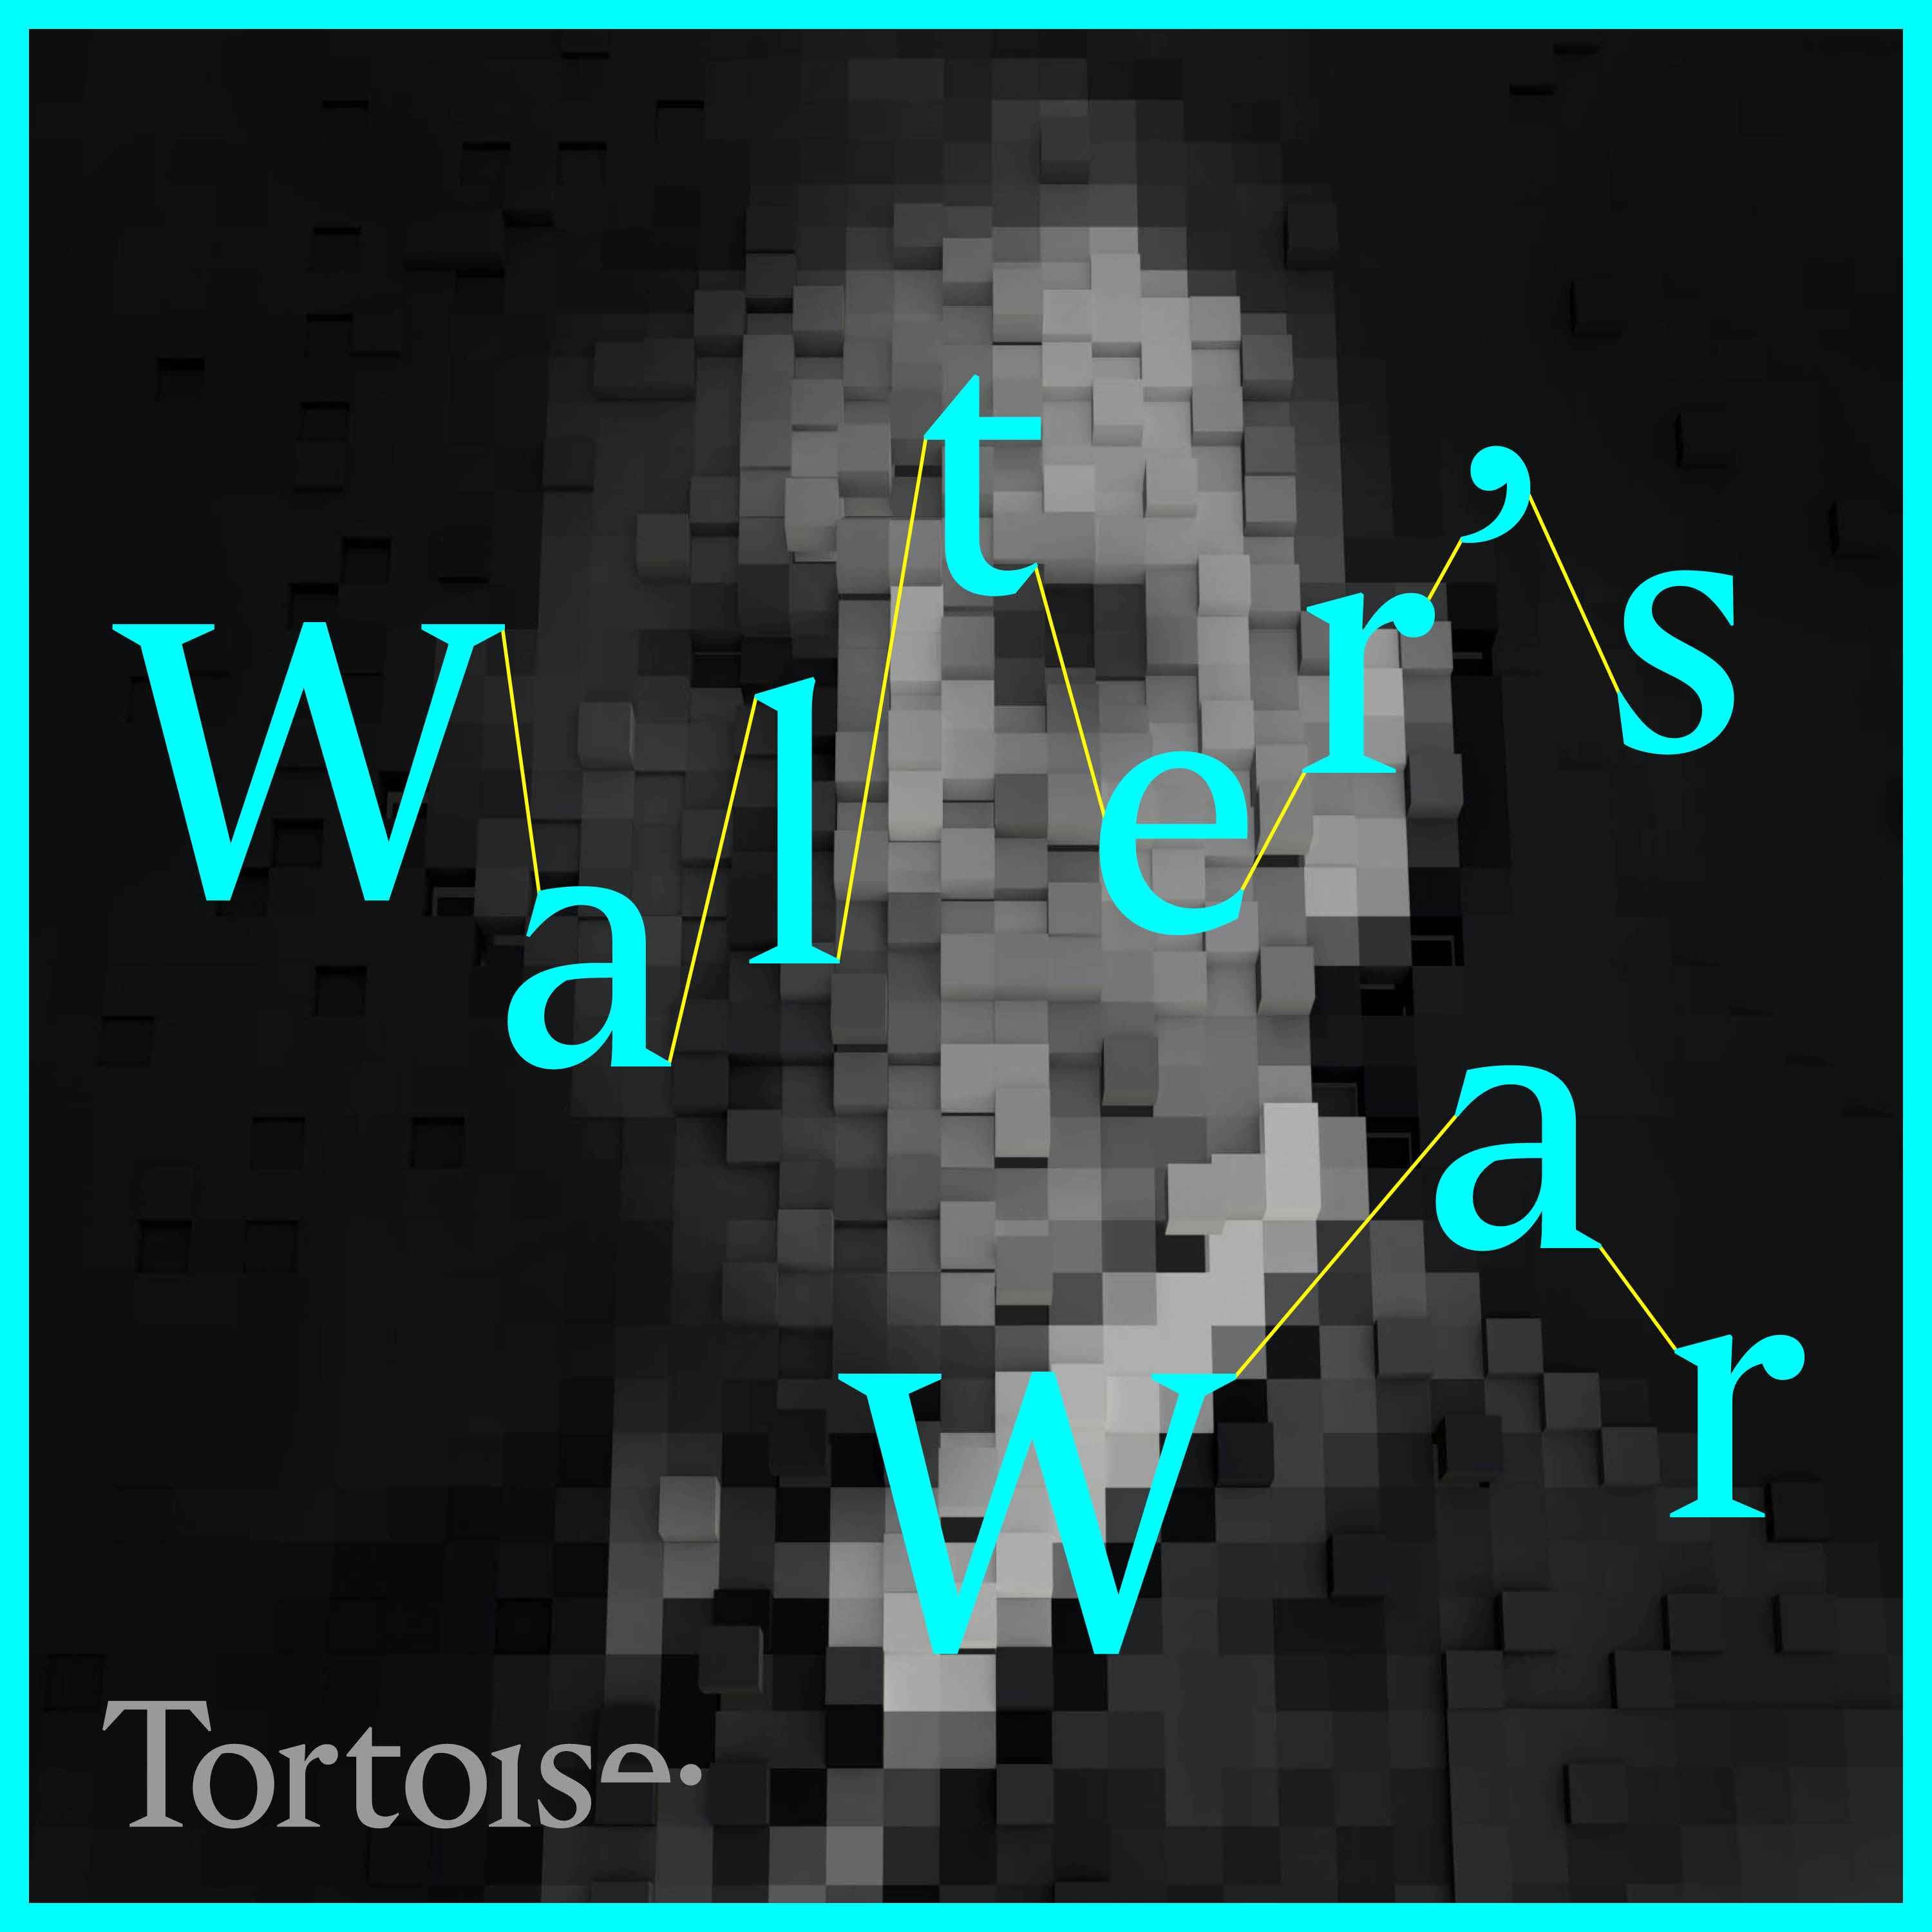 Walter’s War: Episode 3 - The rebellion